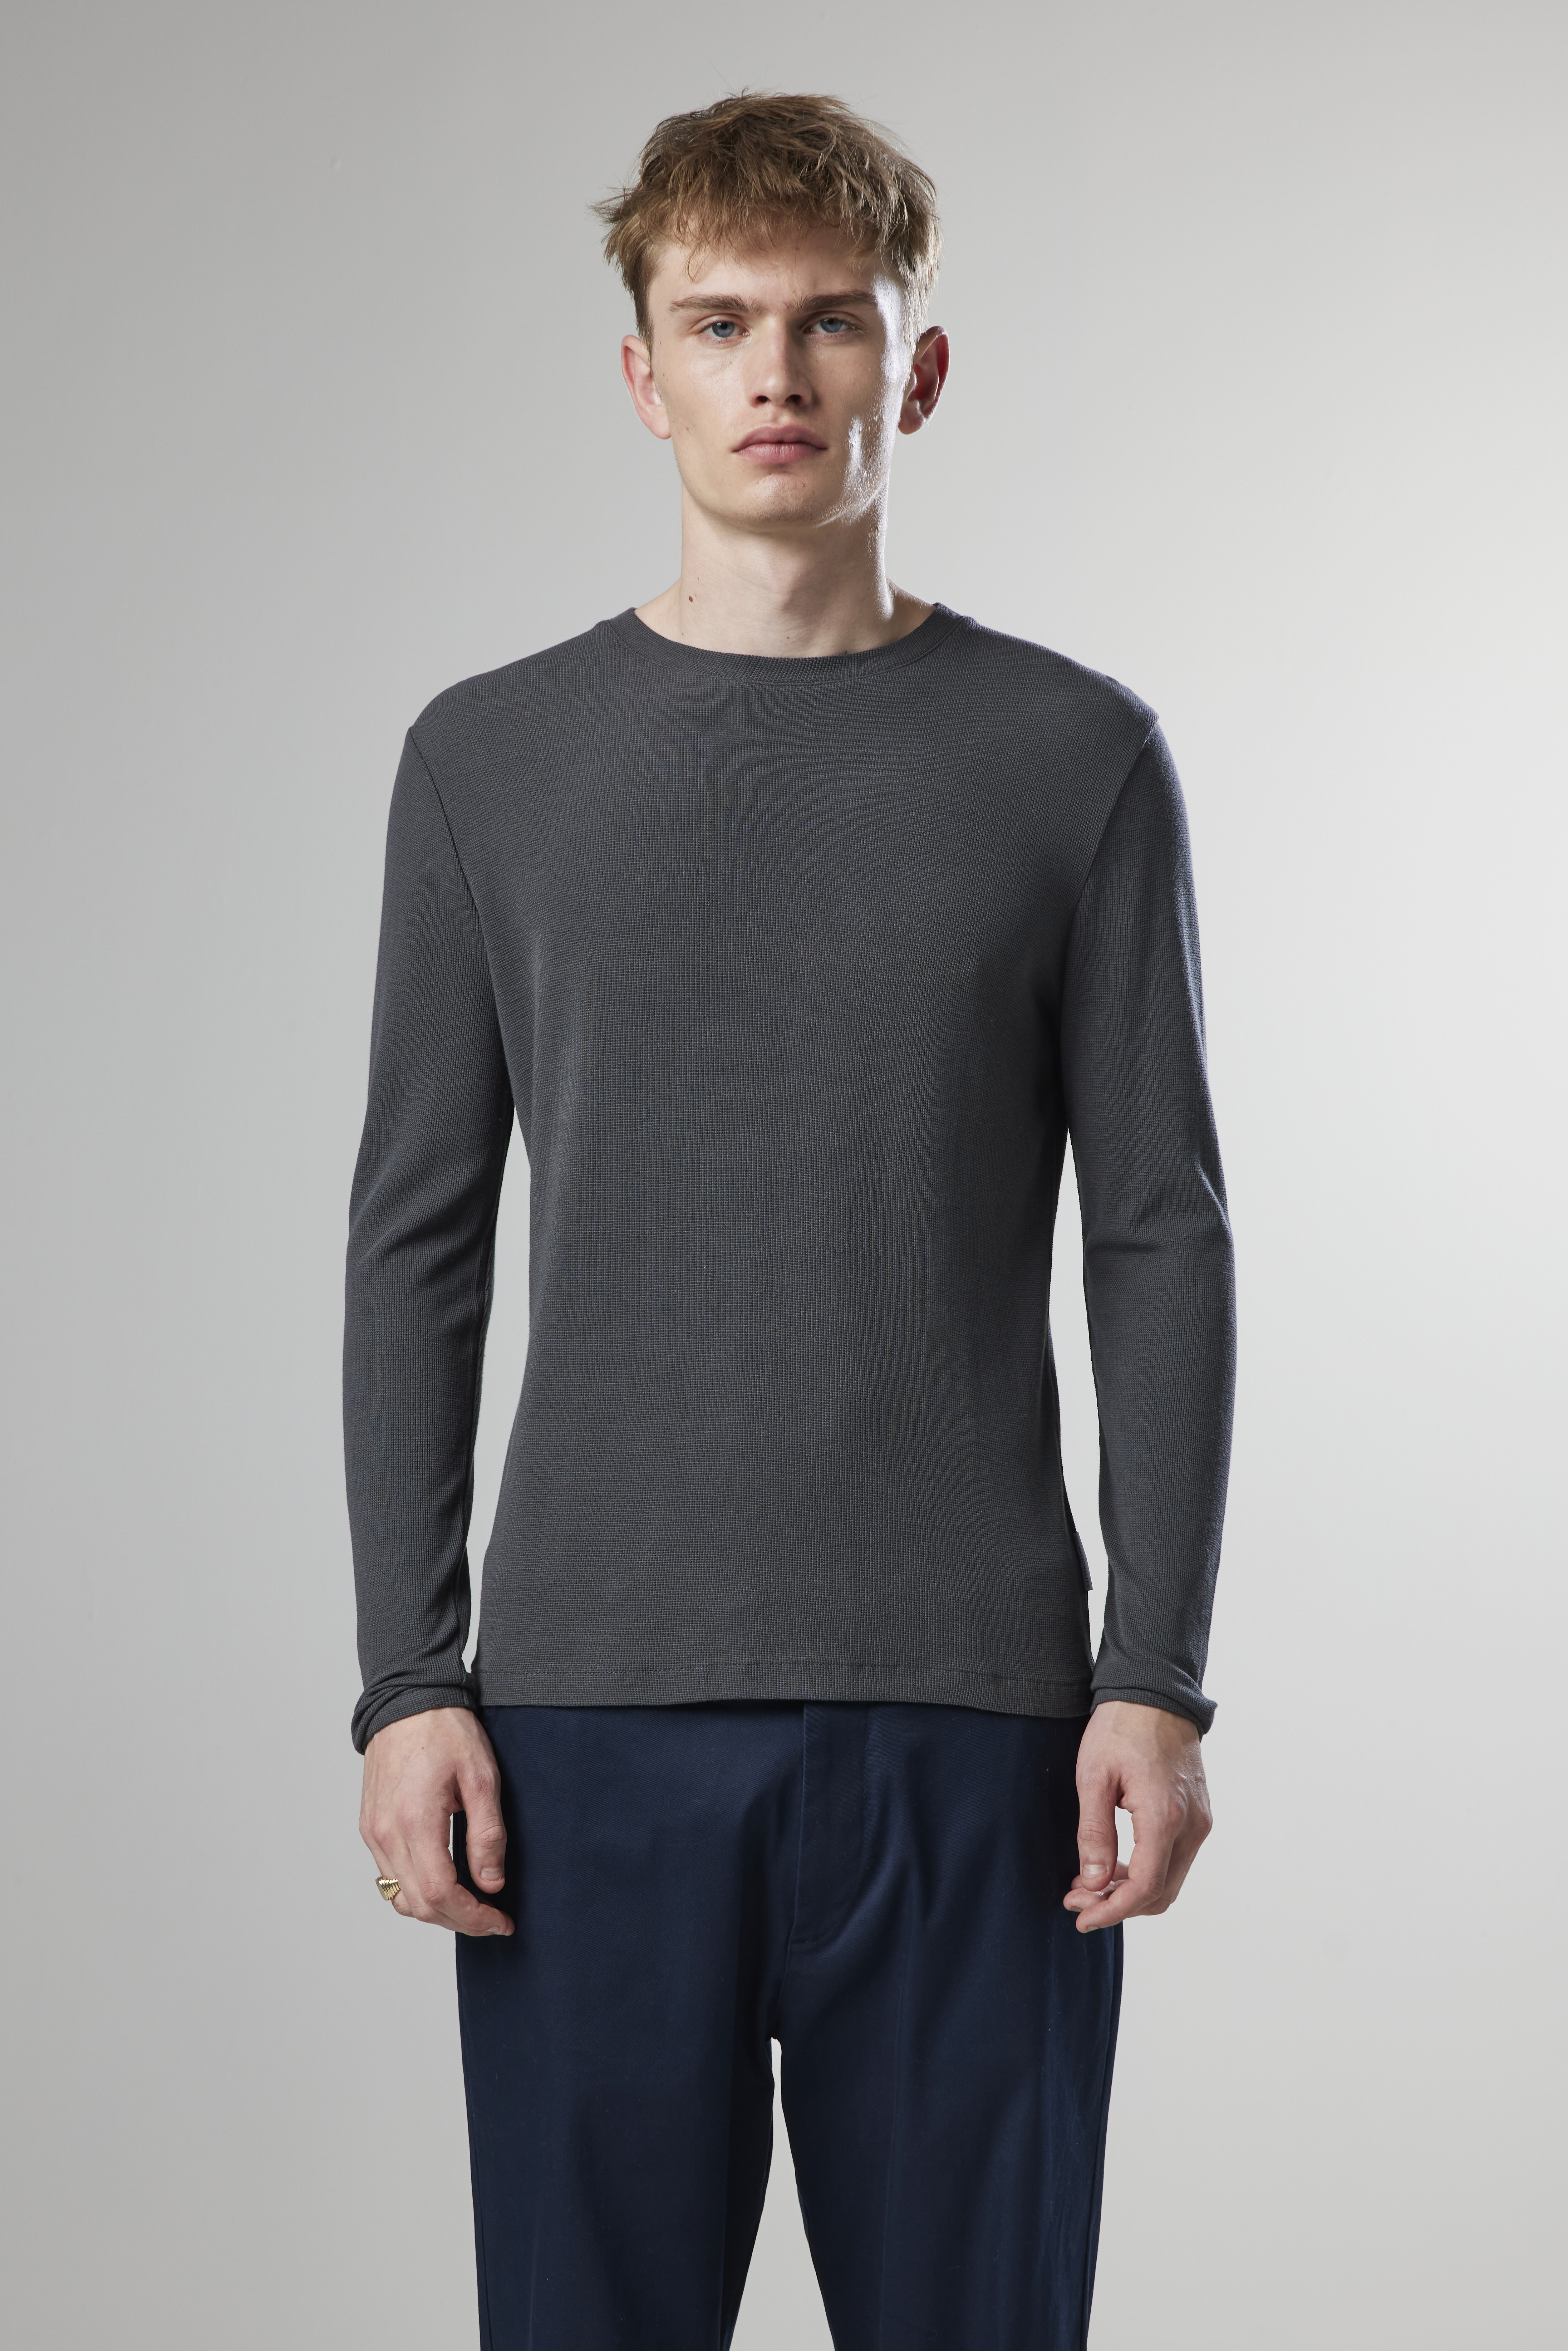 Clive 3323 men\'s t-shirt - at Grey Buy online 